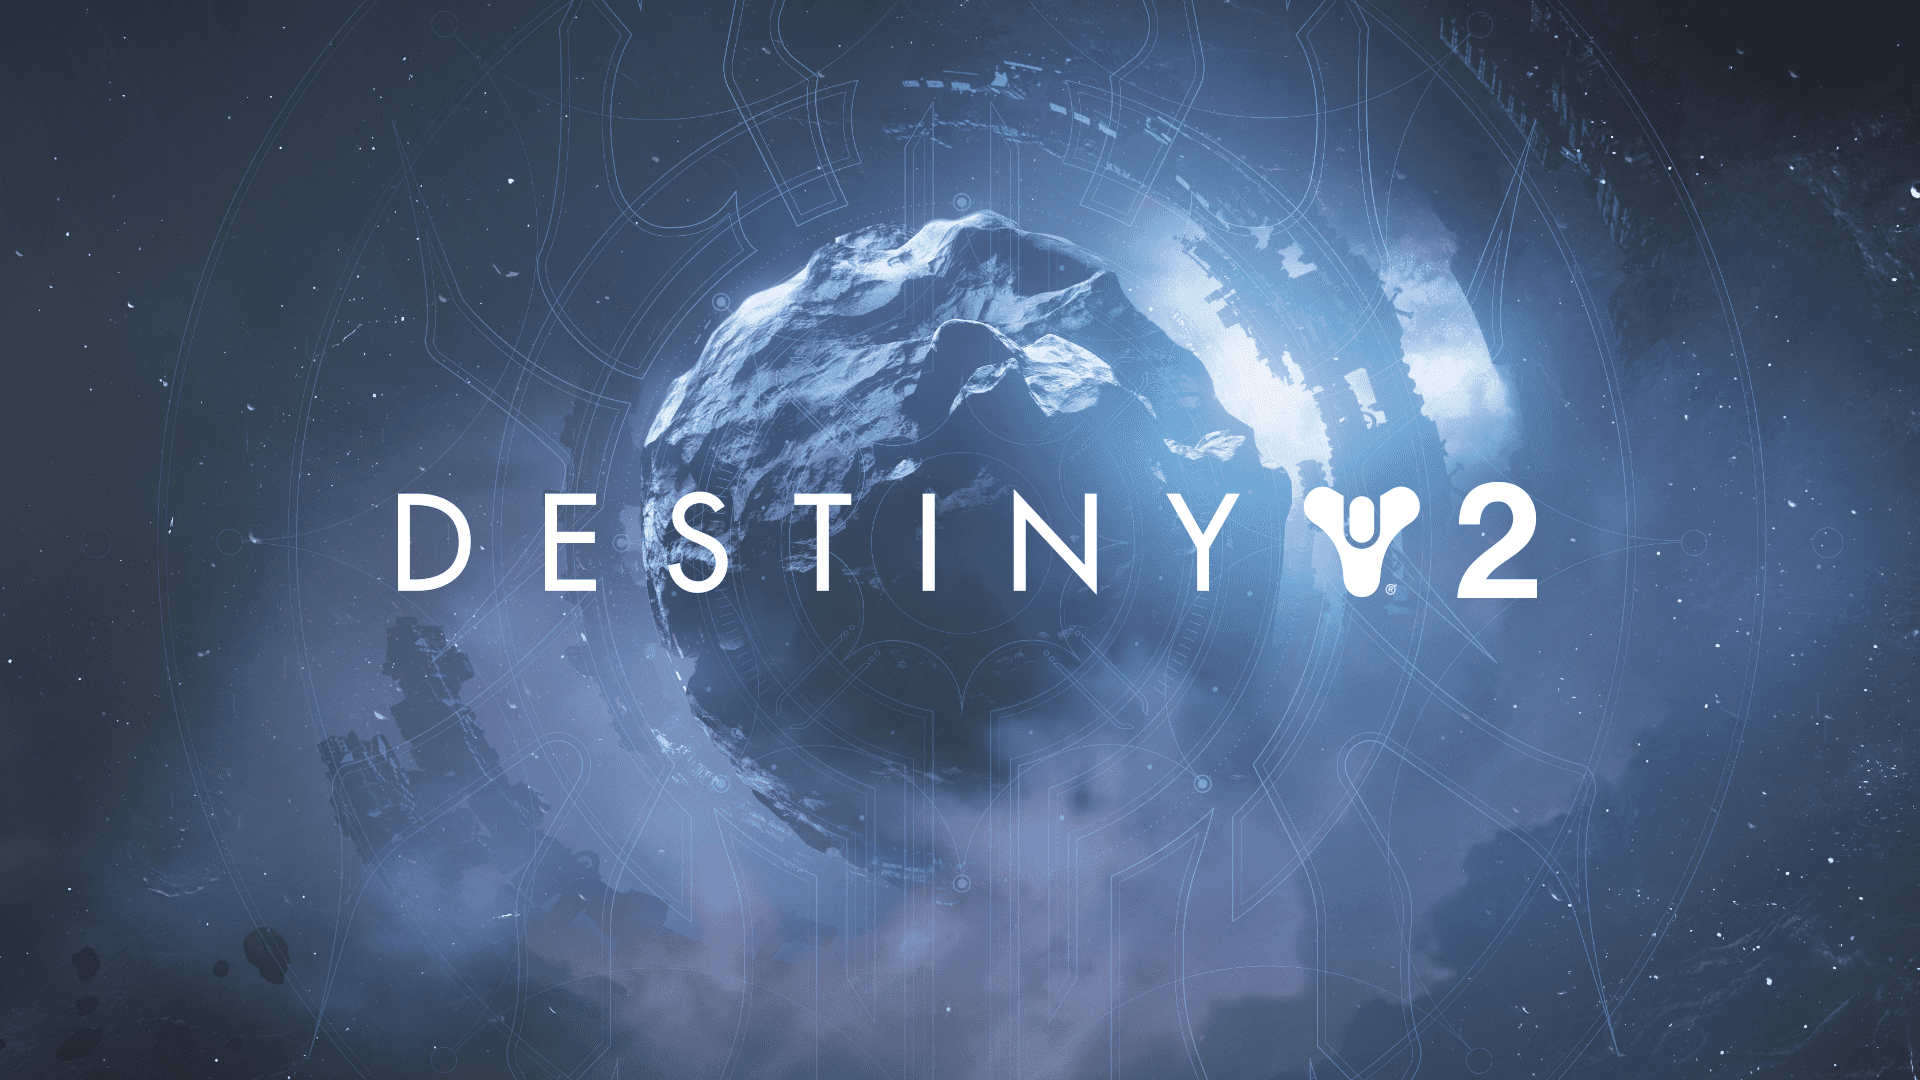 Destiny 2 title screen